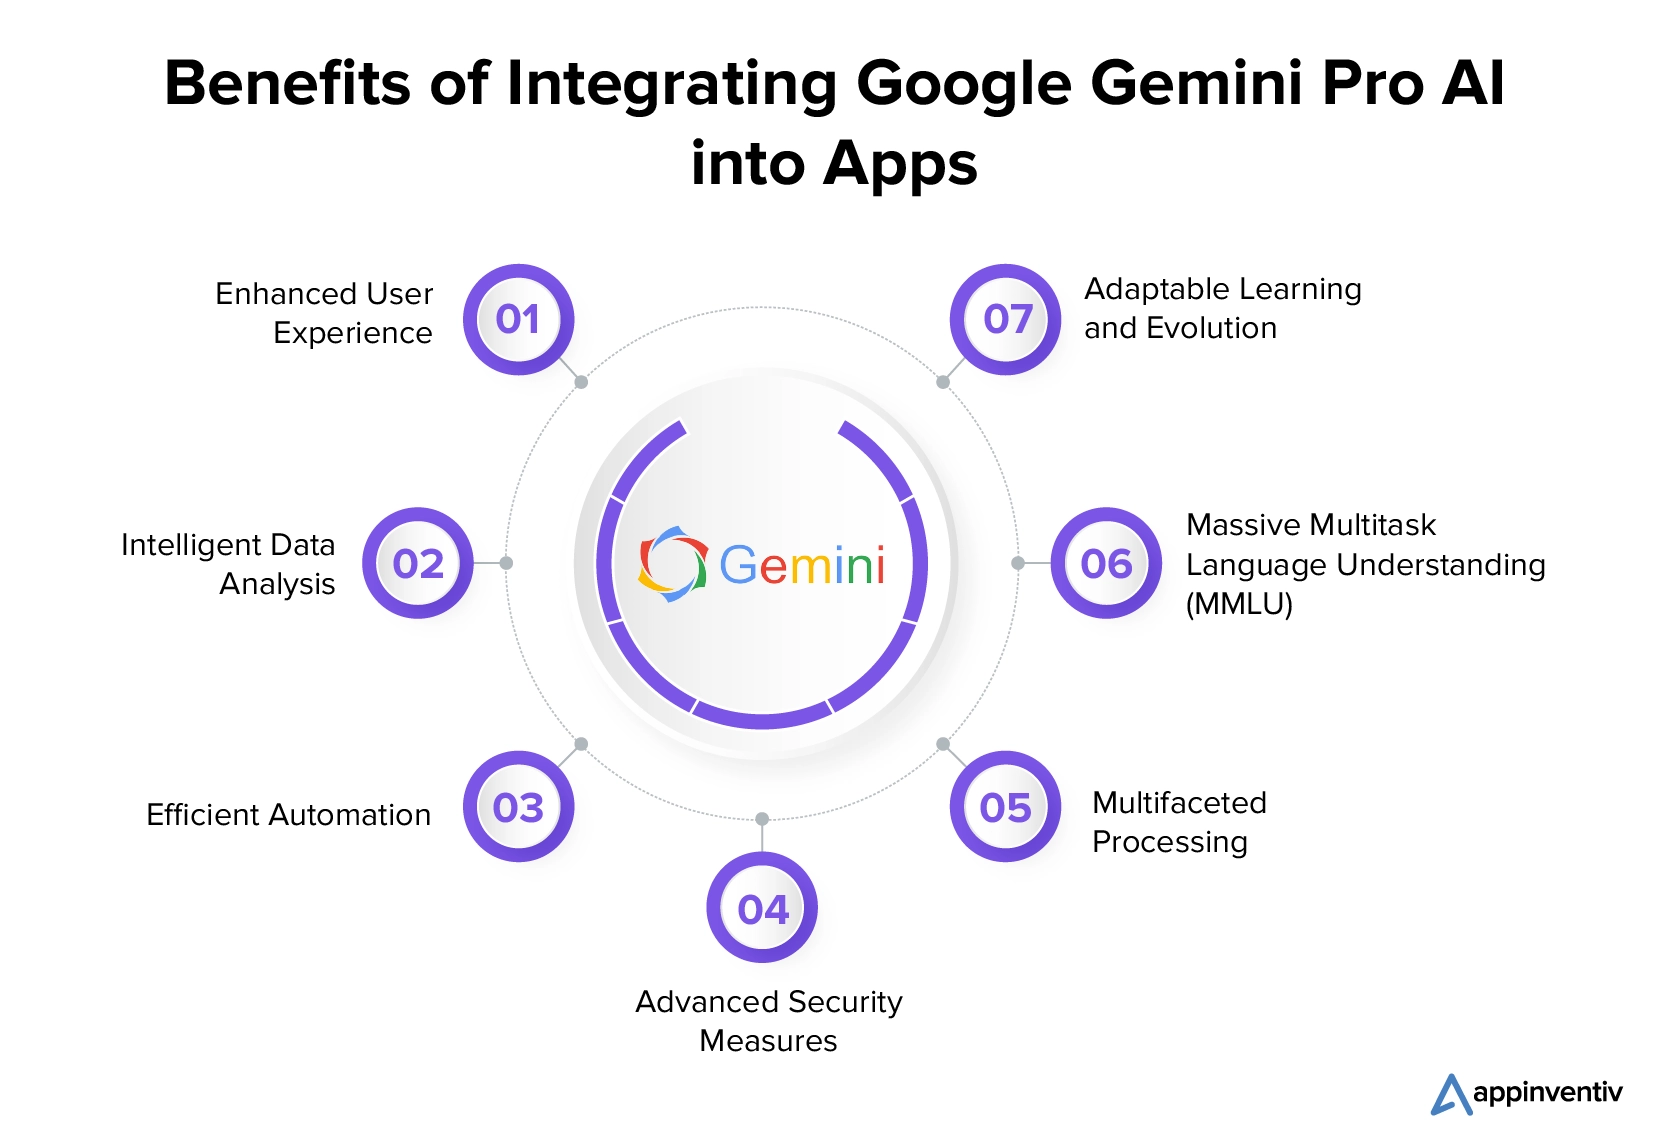 Benefits of Integrating Google Gemini Pro AI into Apps